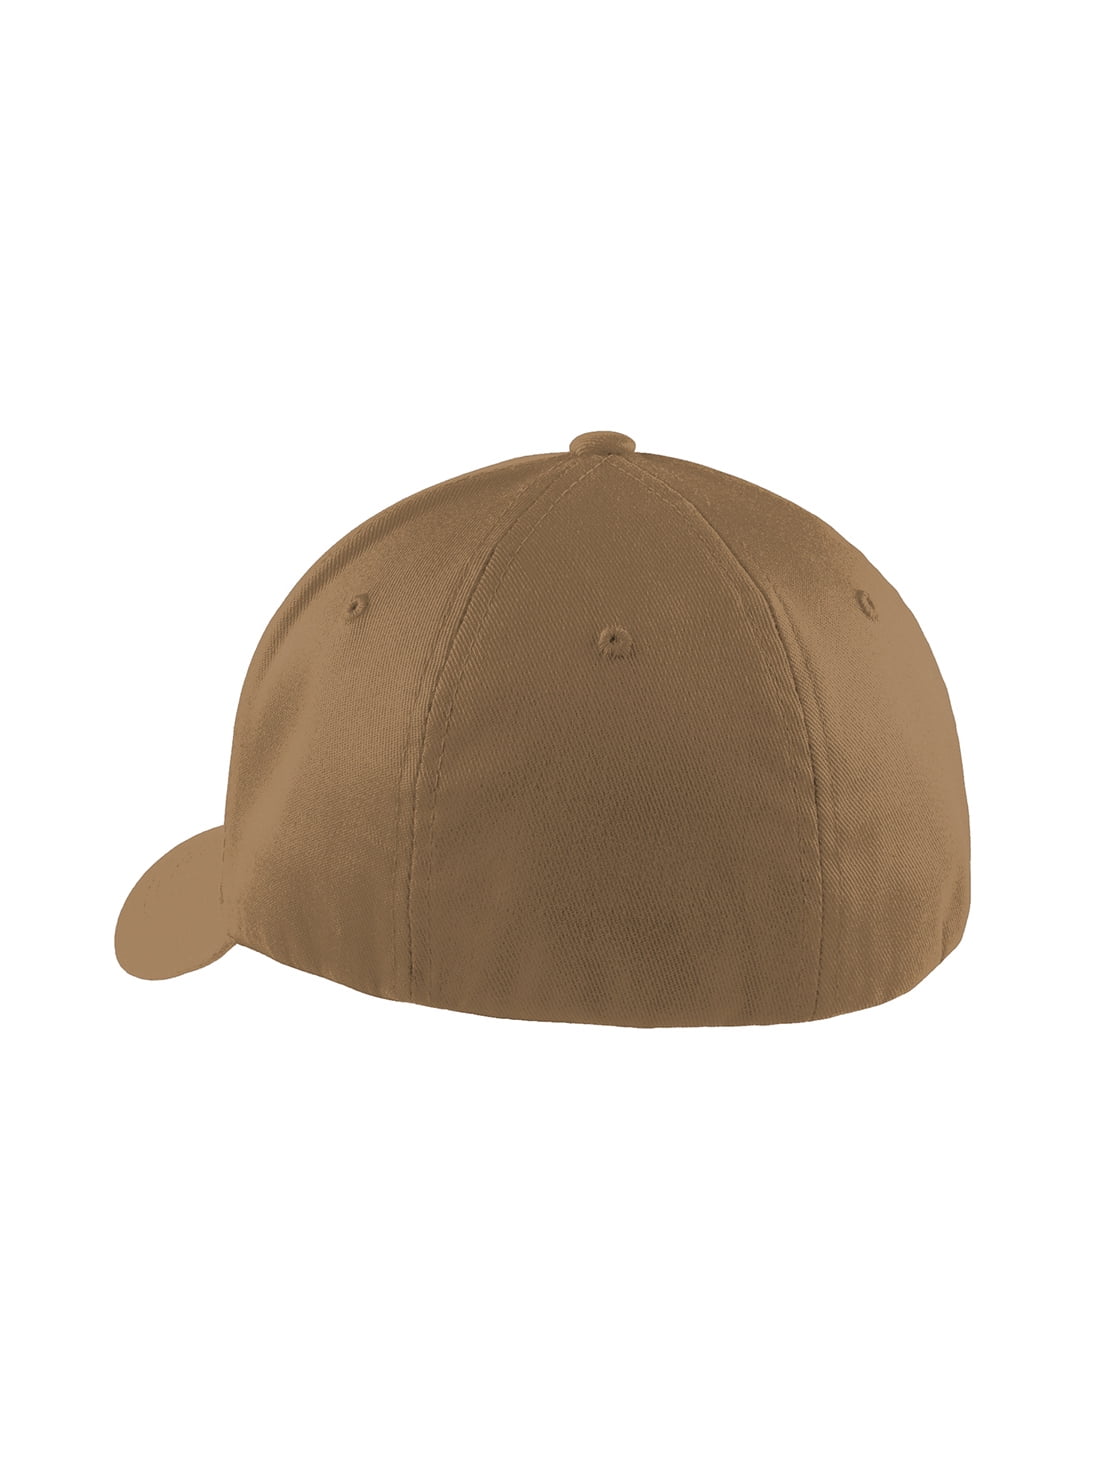 Headwear Flex Top Baseball - Large/X-Large Woodland Cap - Fit Brown